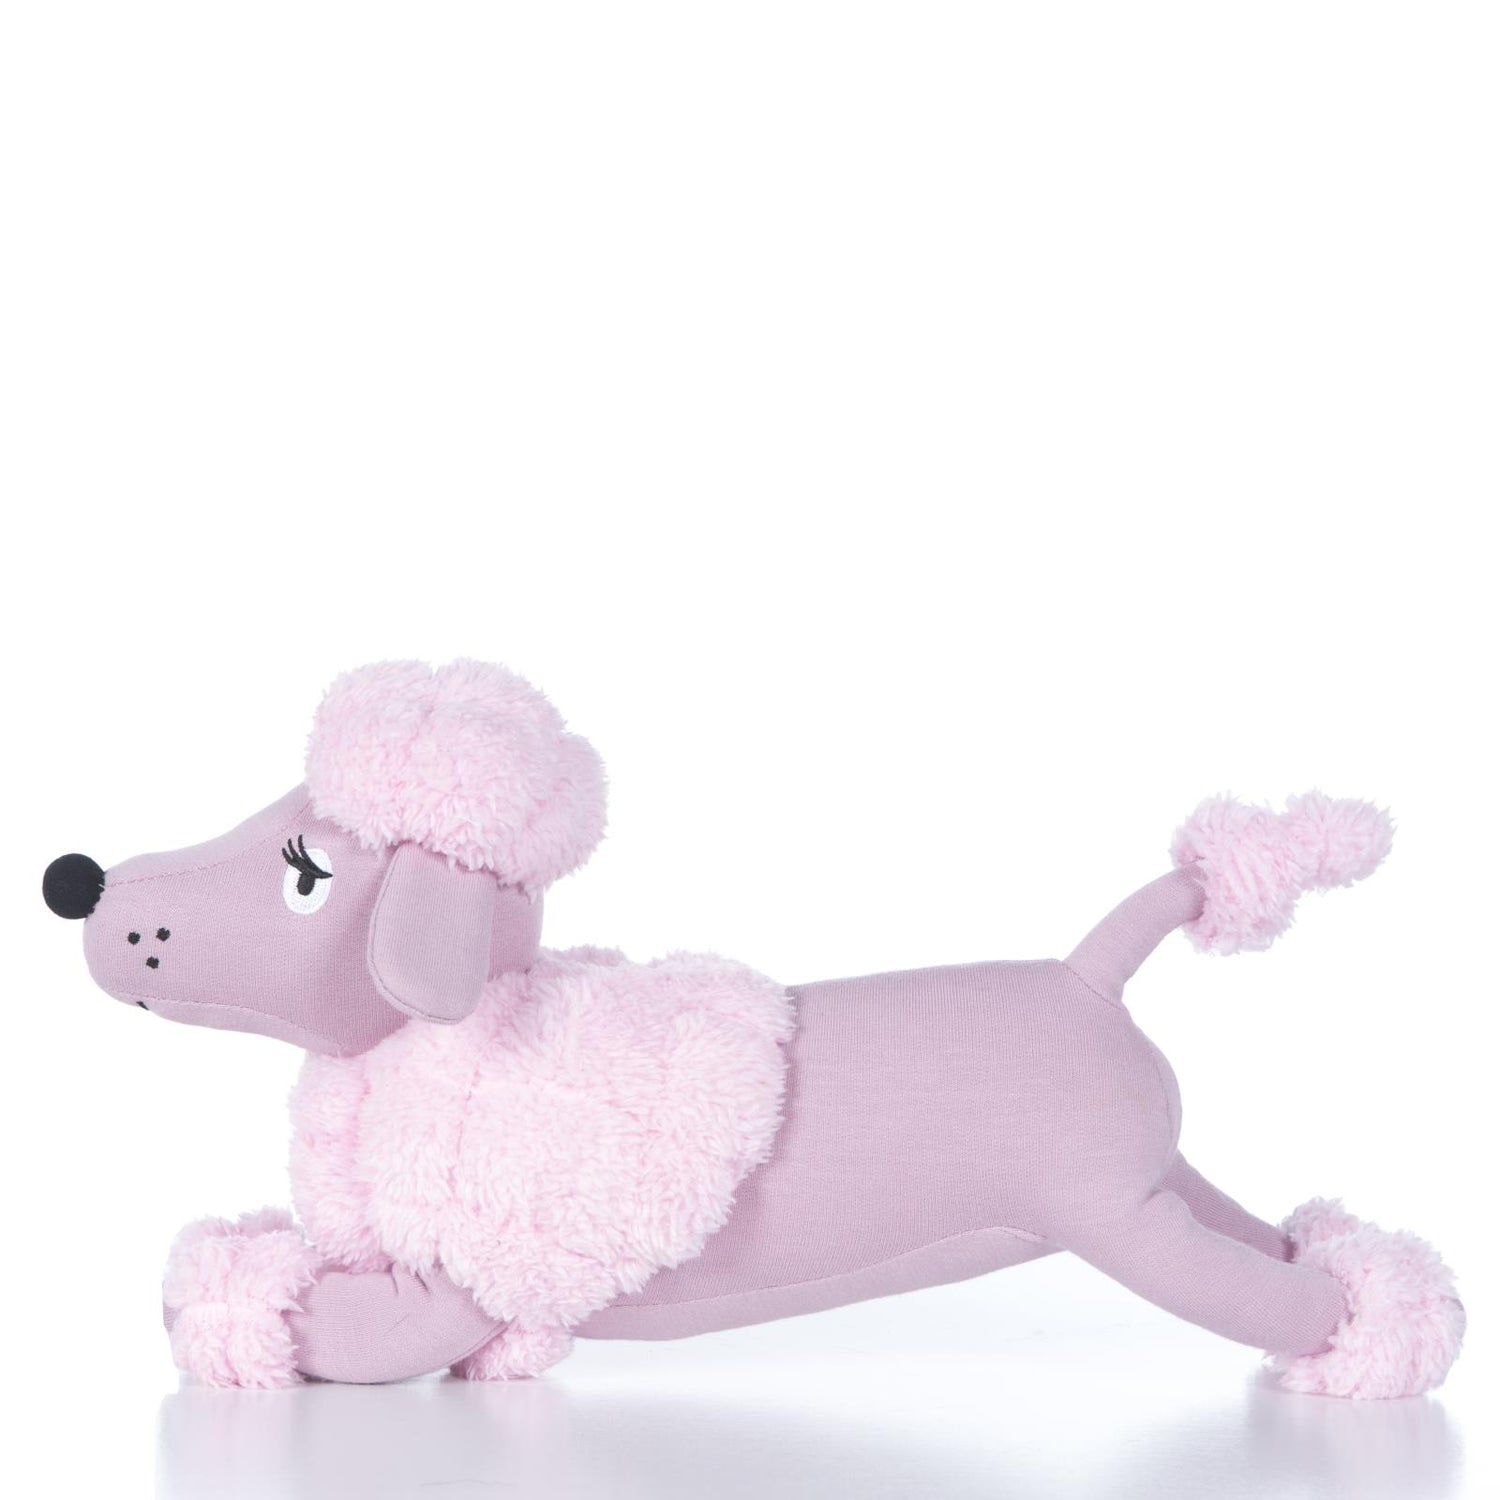 Plush Toy: Poppy the Poodle